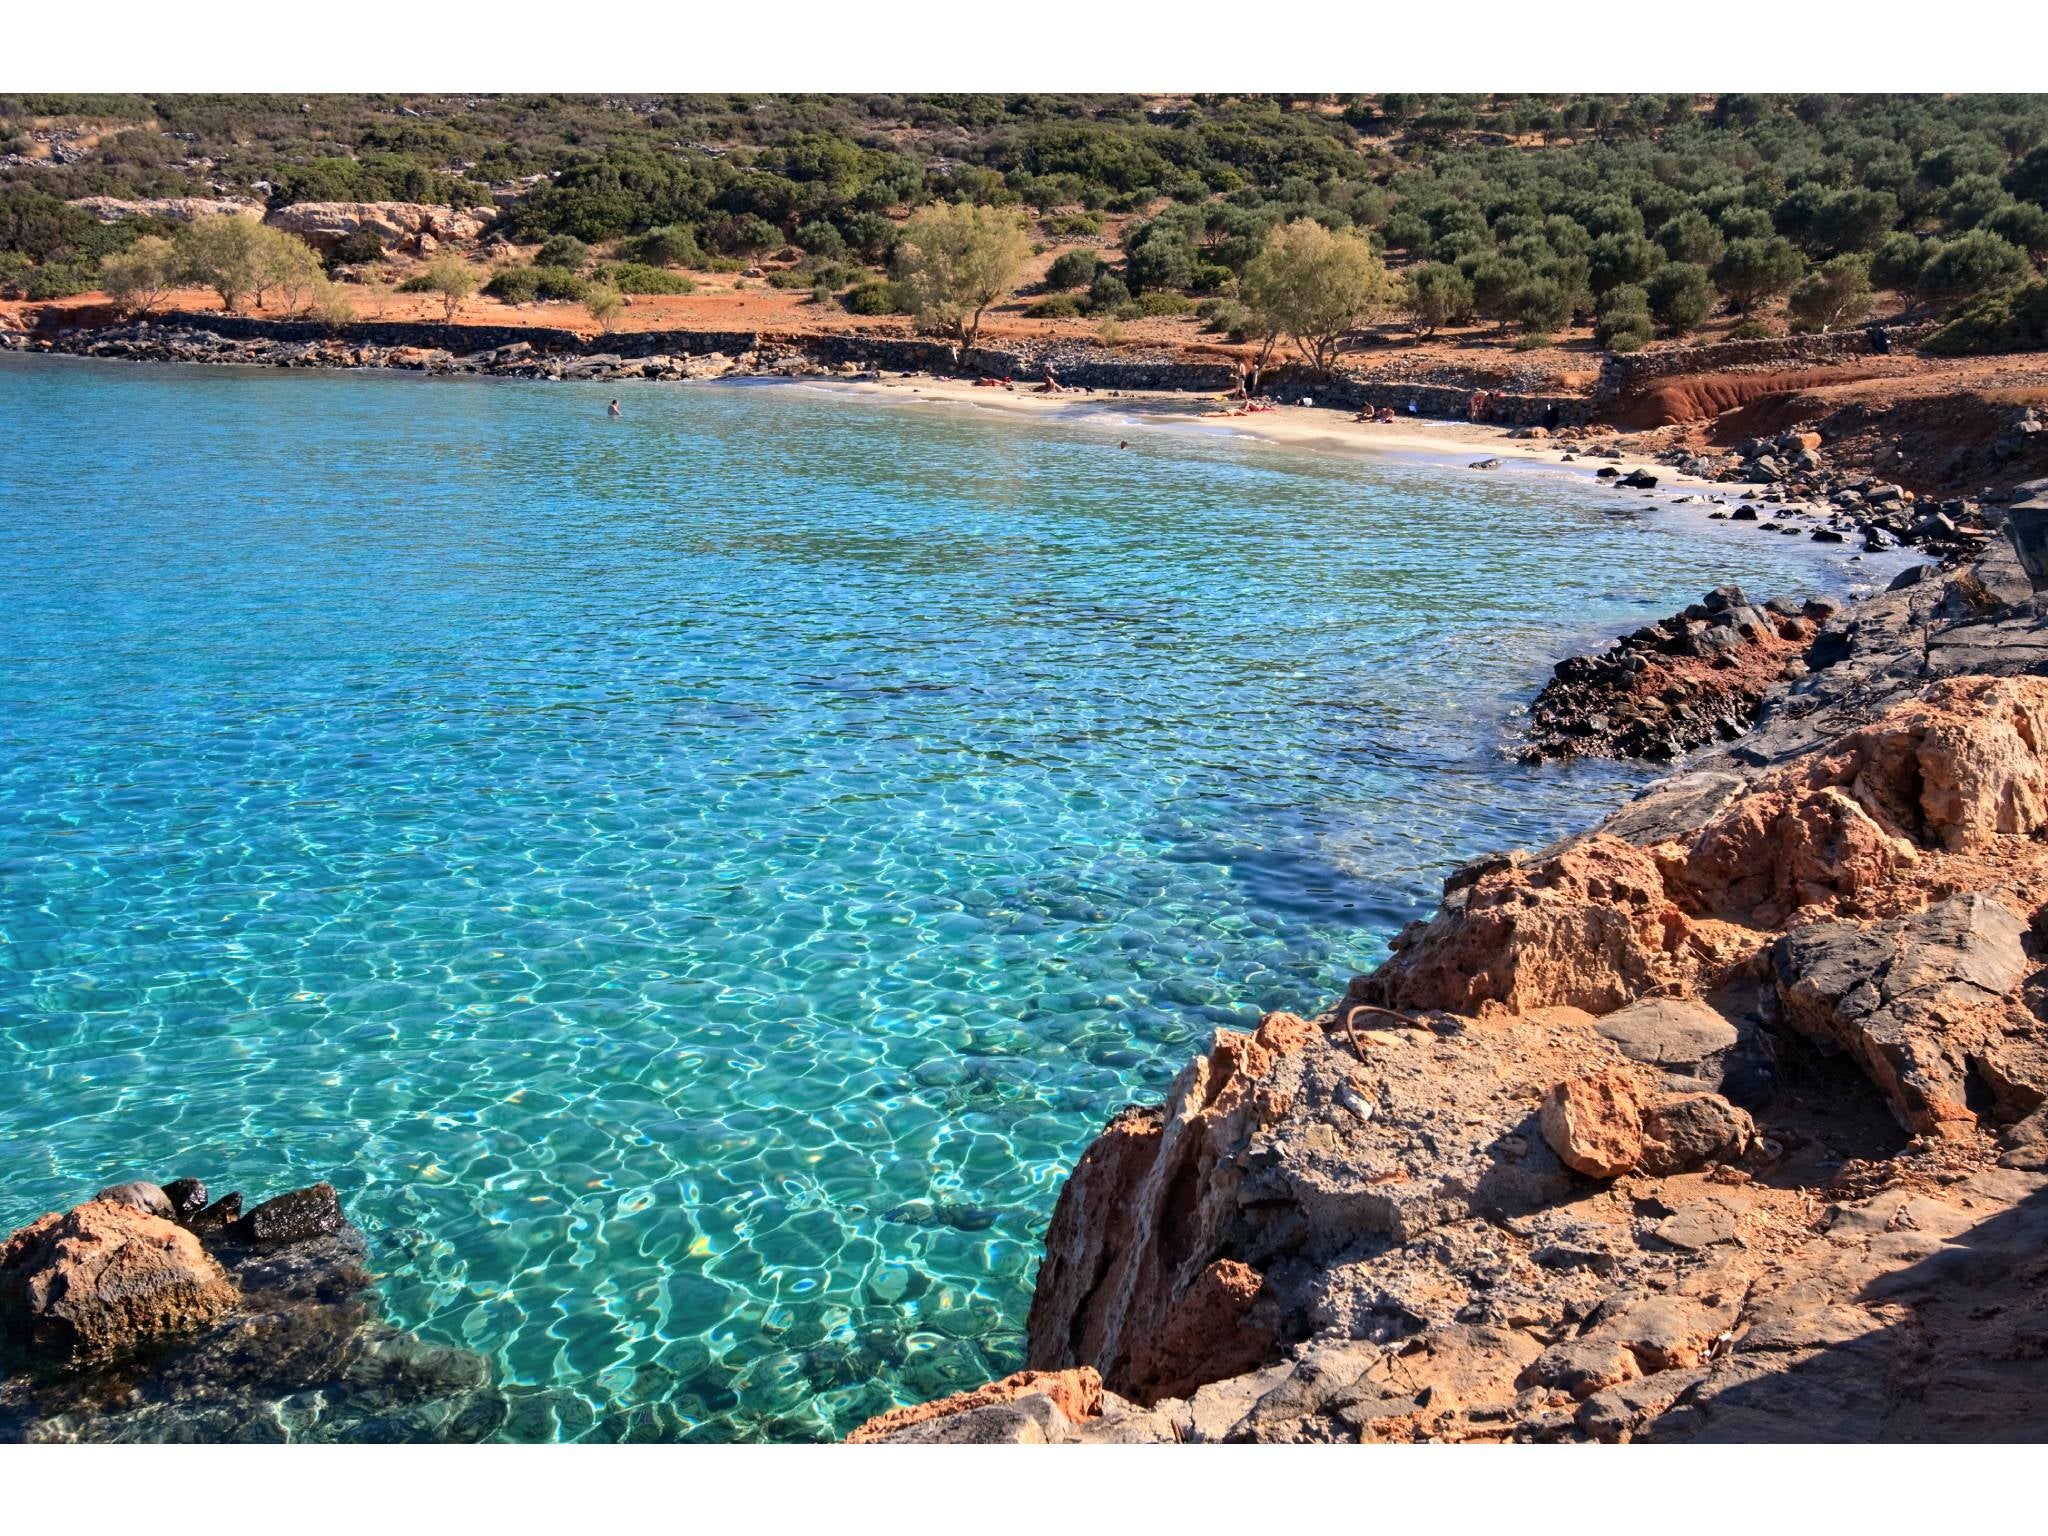 Sitting around 40 miles from Heraklion airport, Elounda can provide a serene sunbathing spot